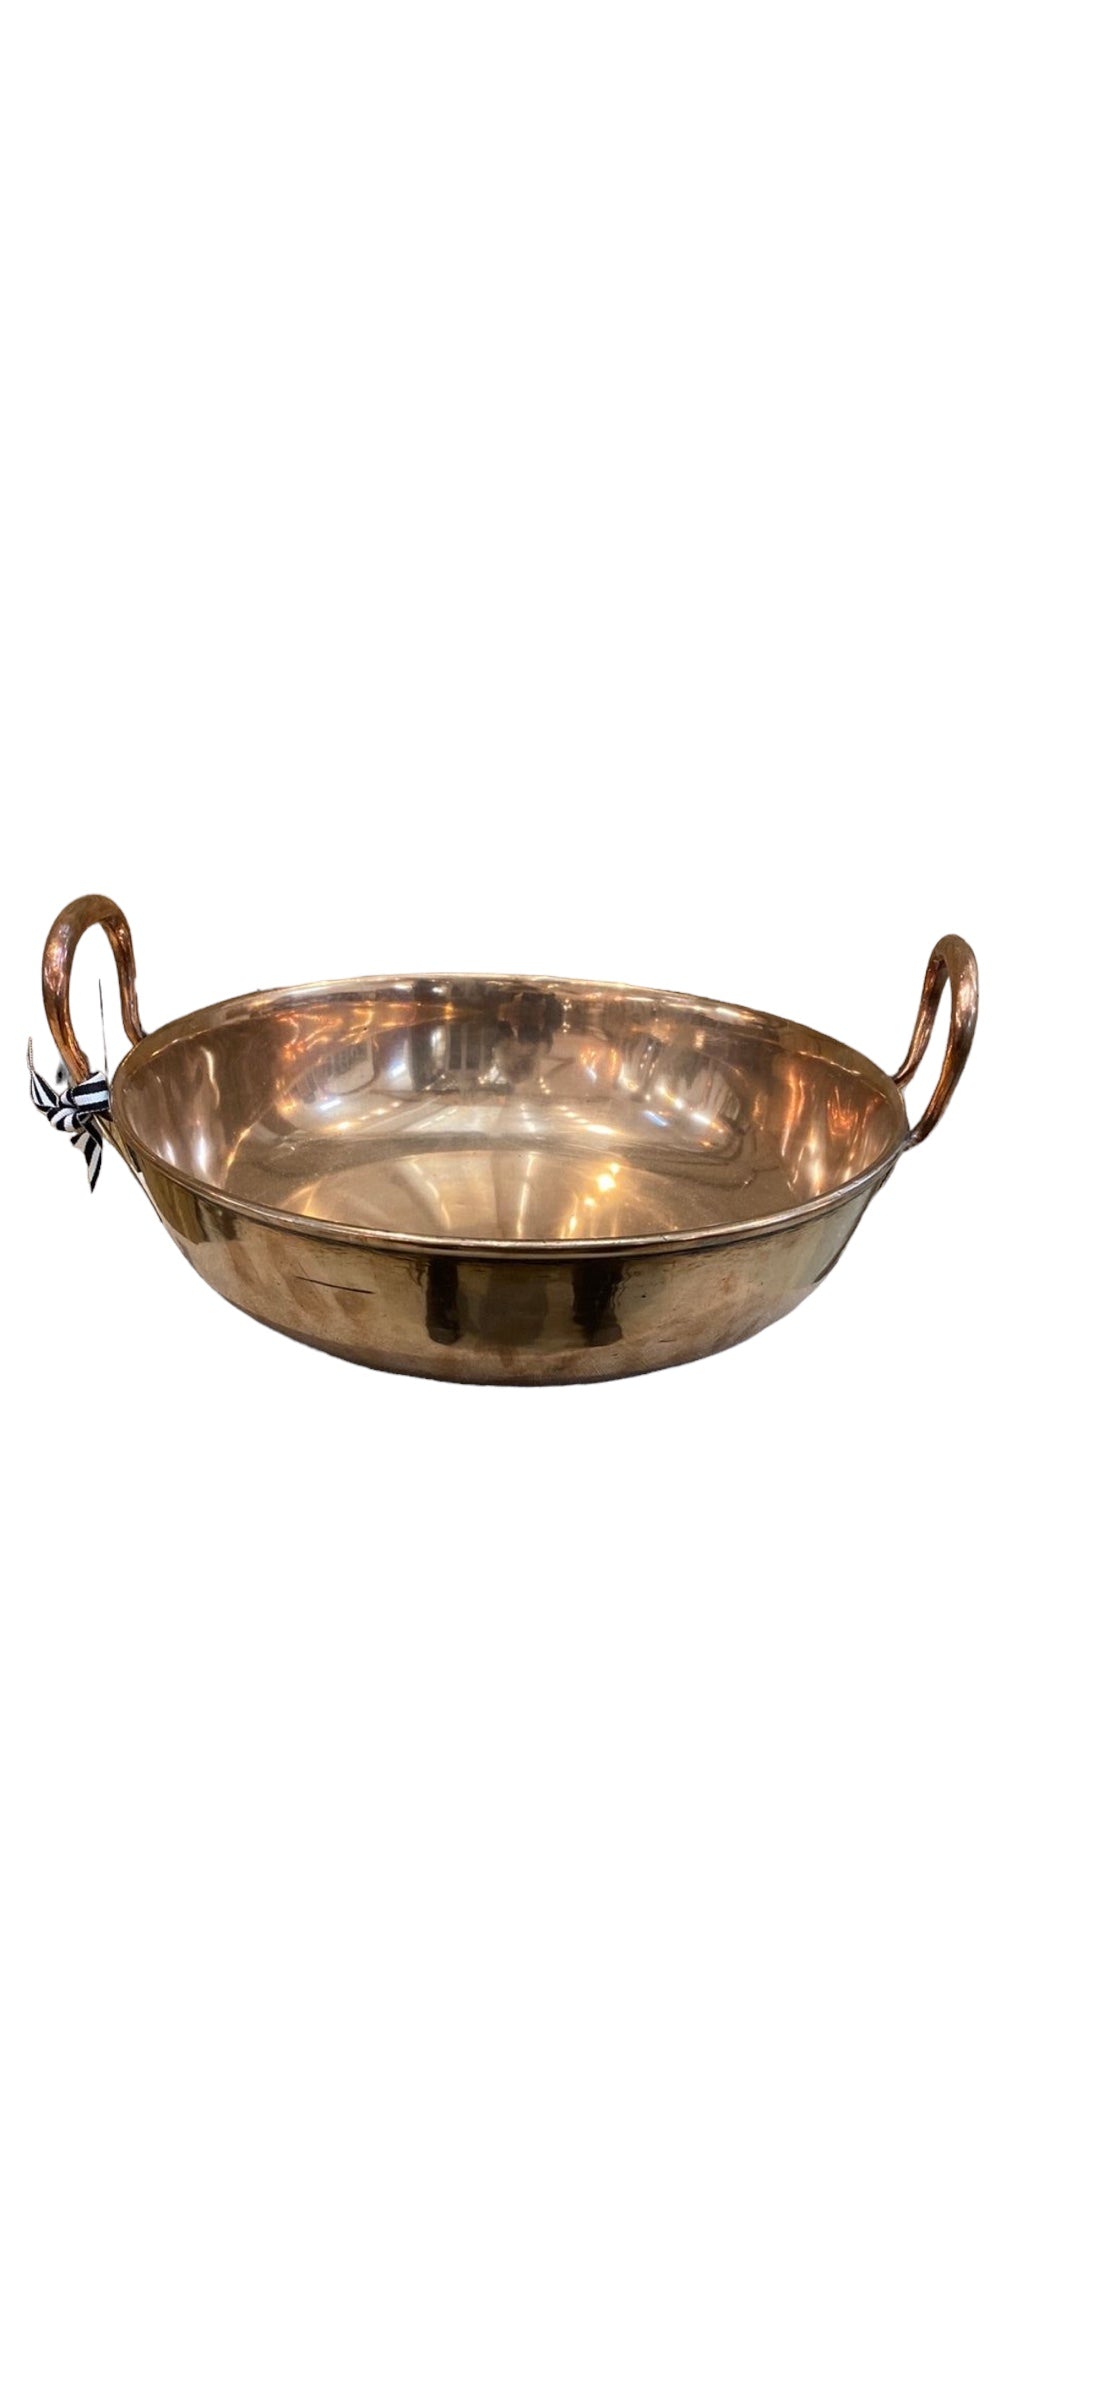 Copper Preserve Pan